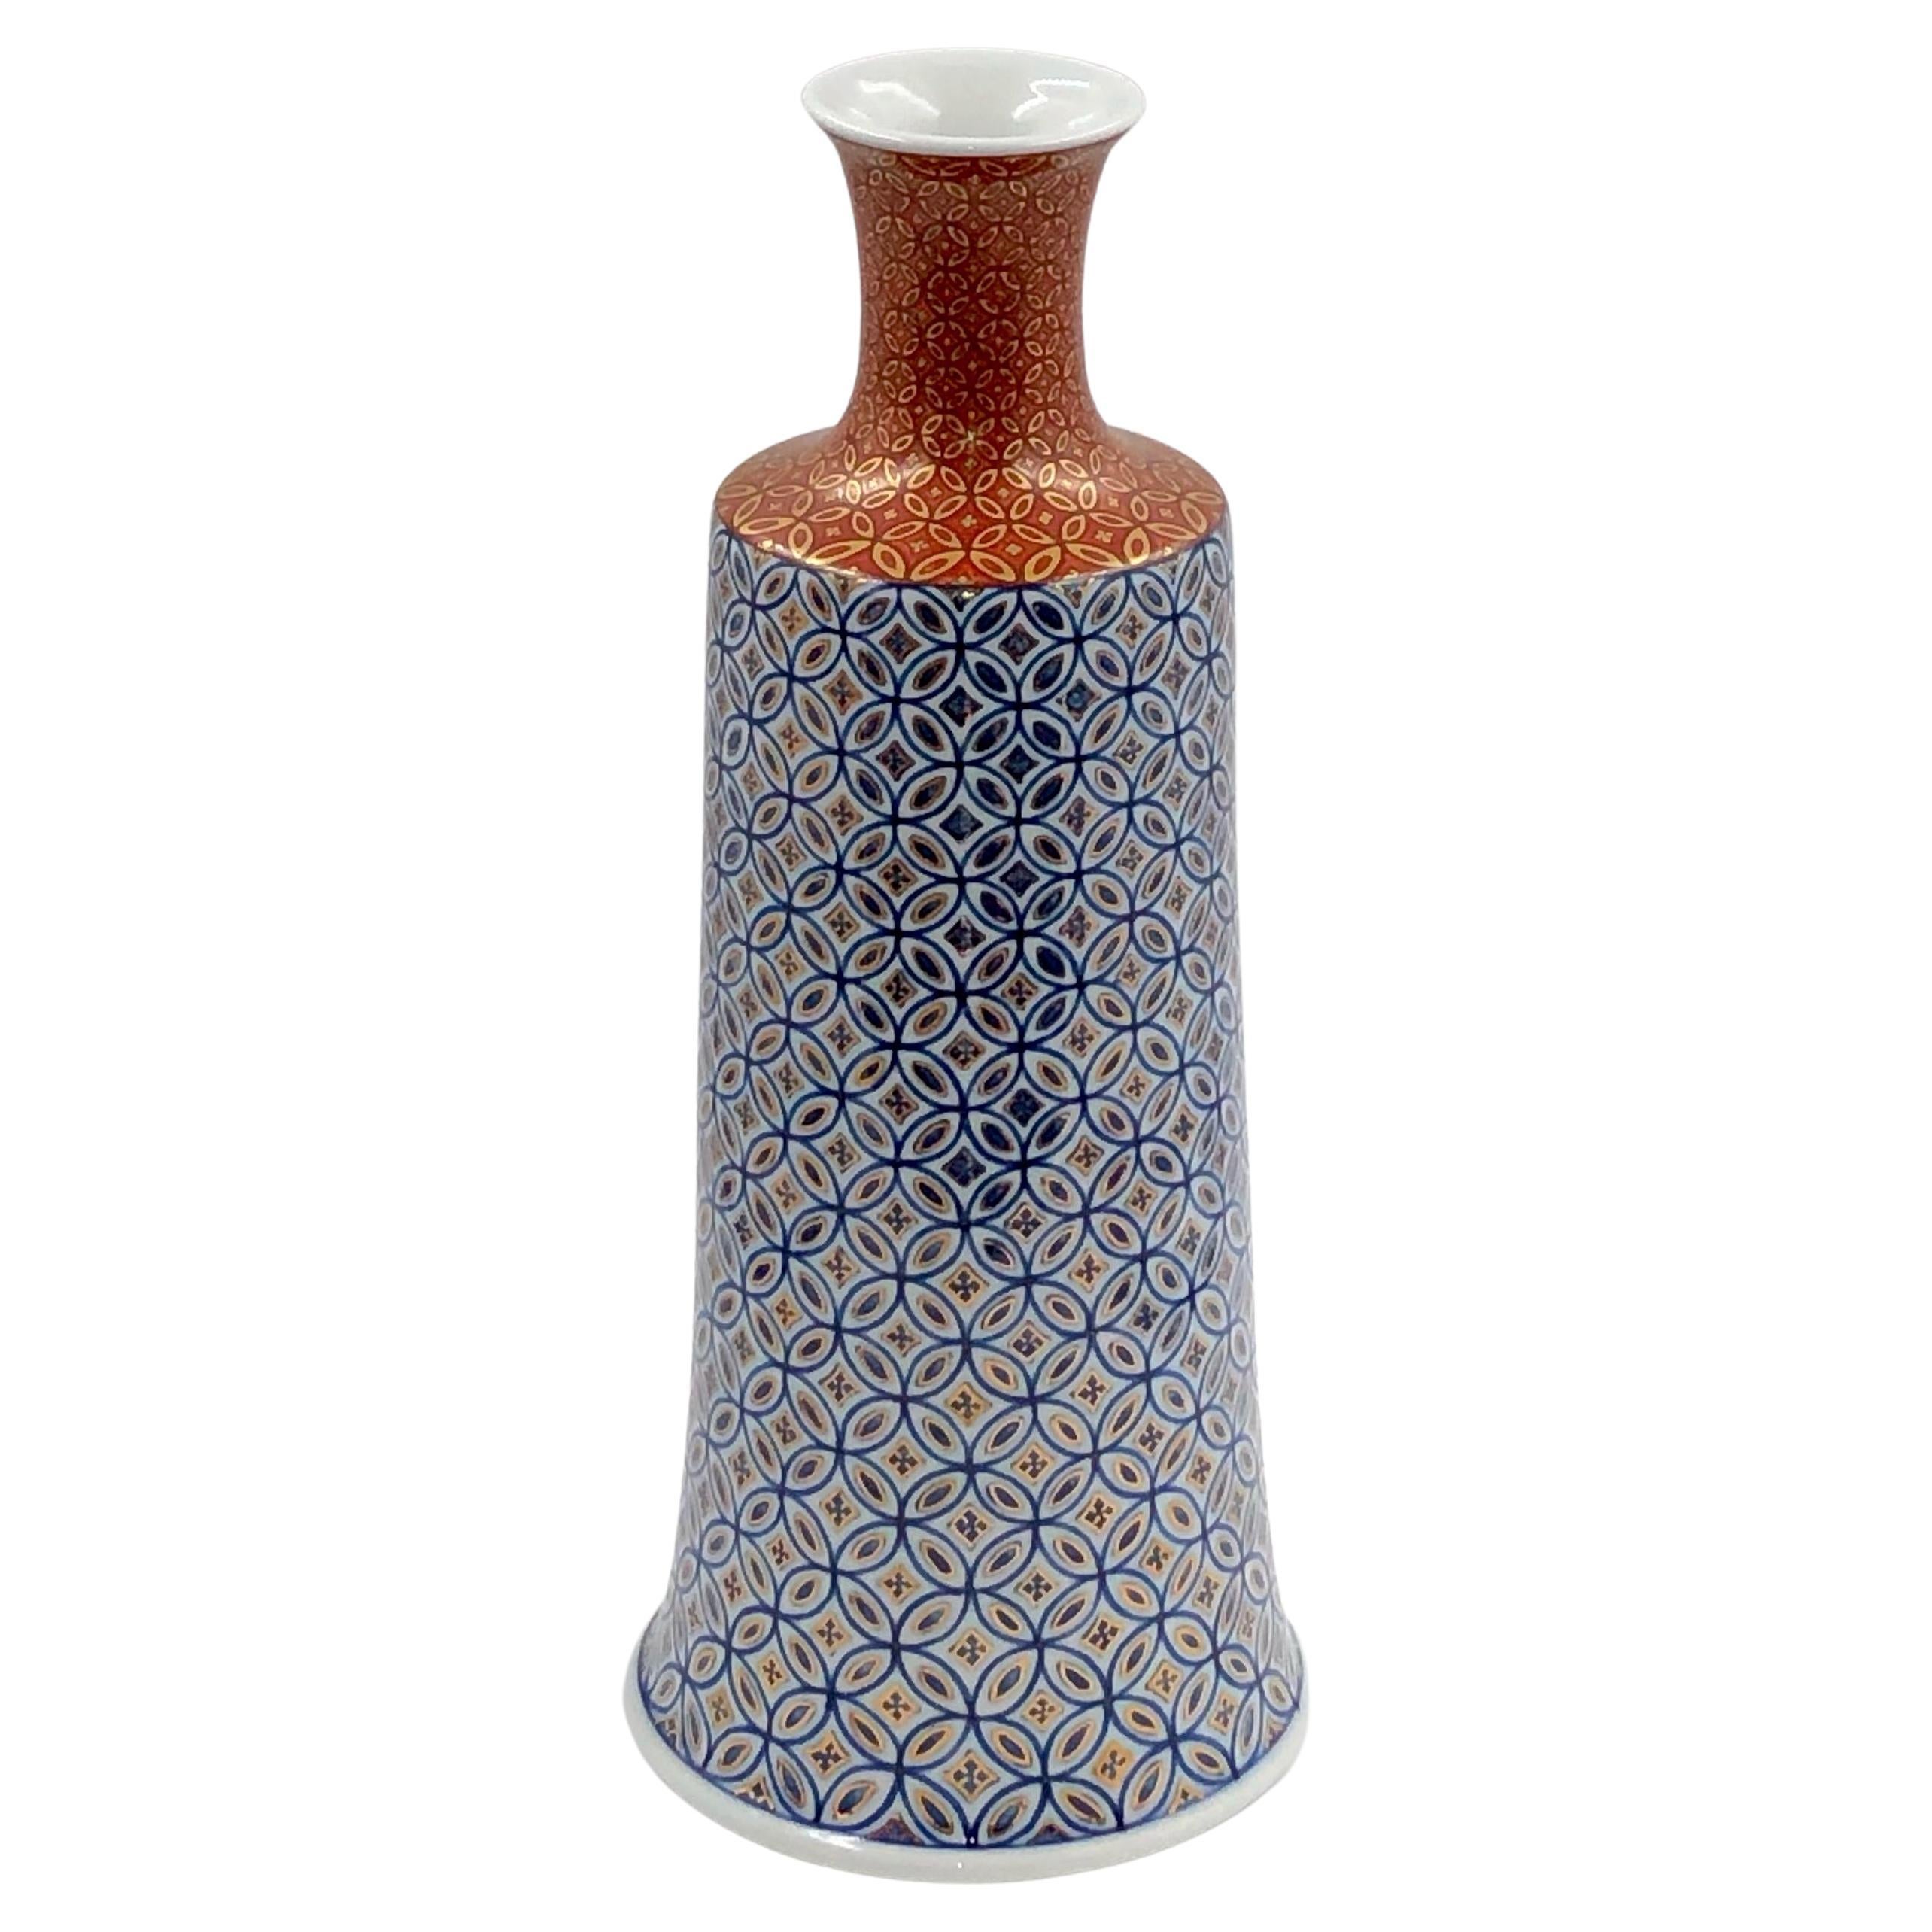 Japanese Contemporary Red Blue Gilded Porcelain Vase by Master Artist For Sale